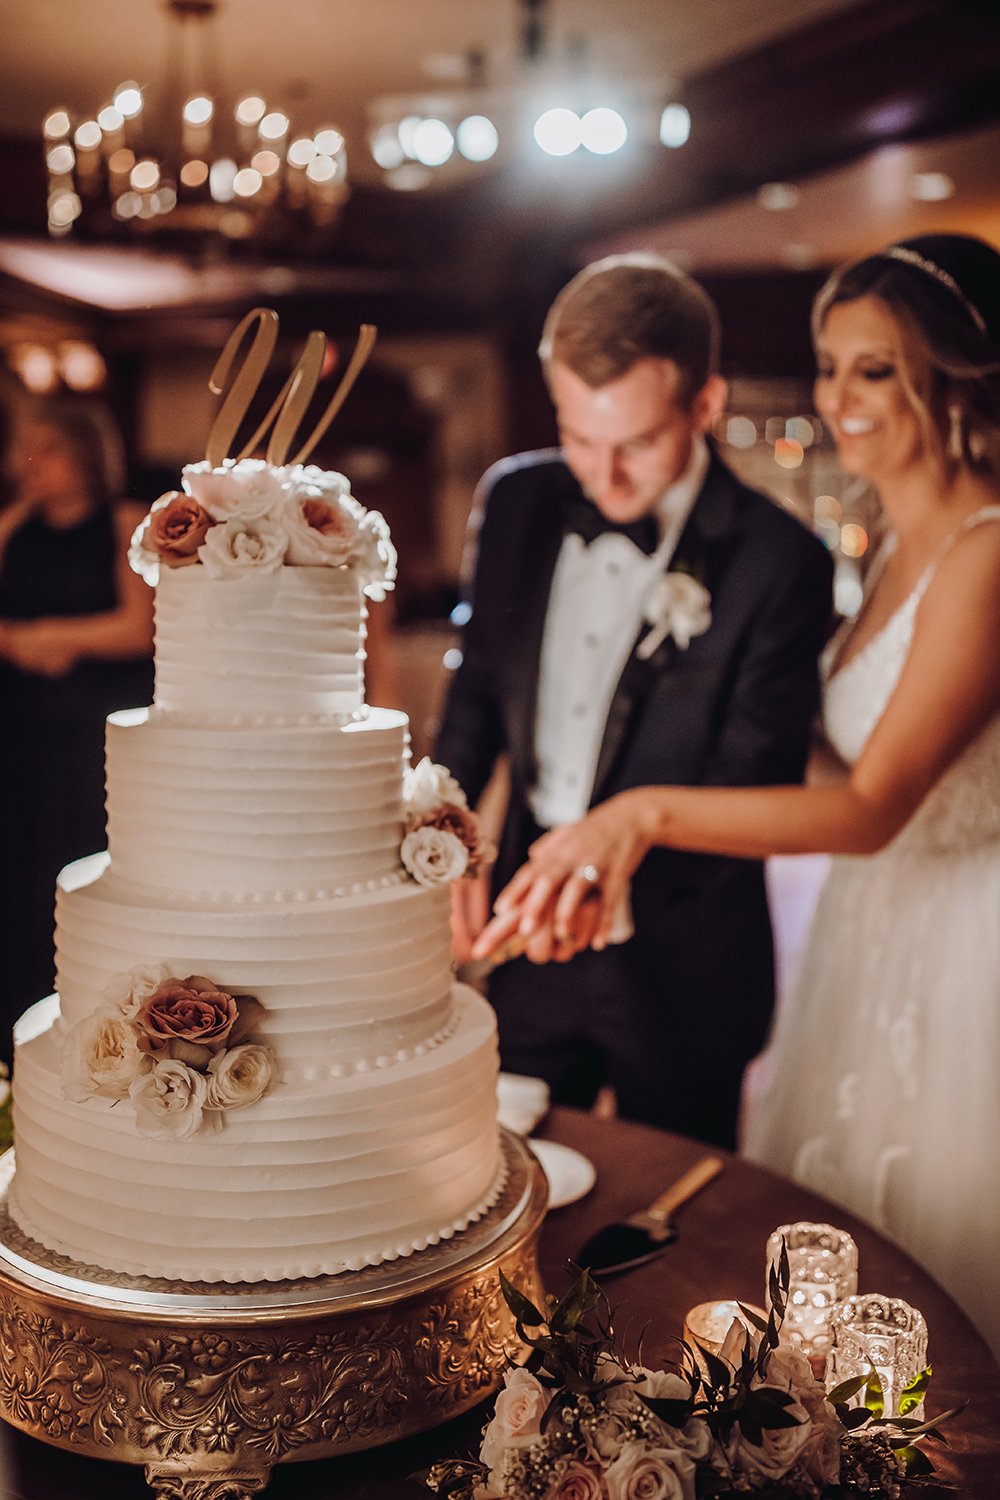 wedding cake design - houston wedding reception - desserts - cake cutting